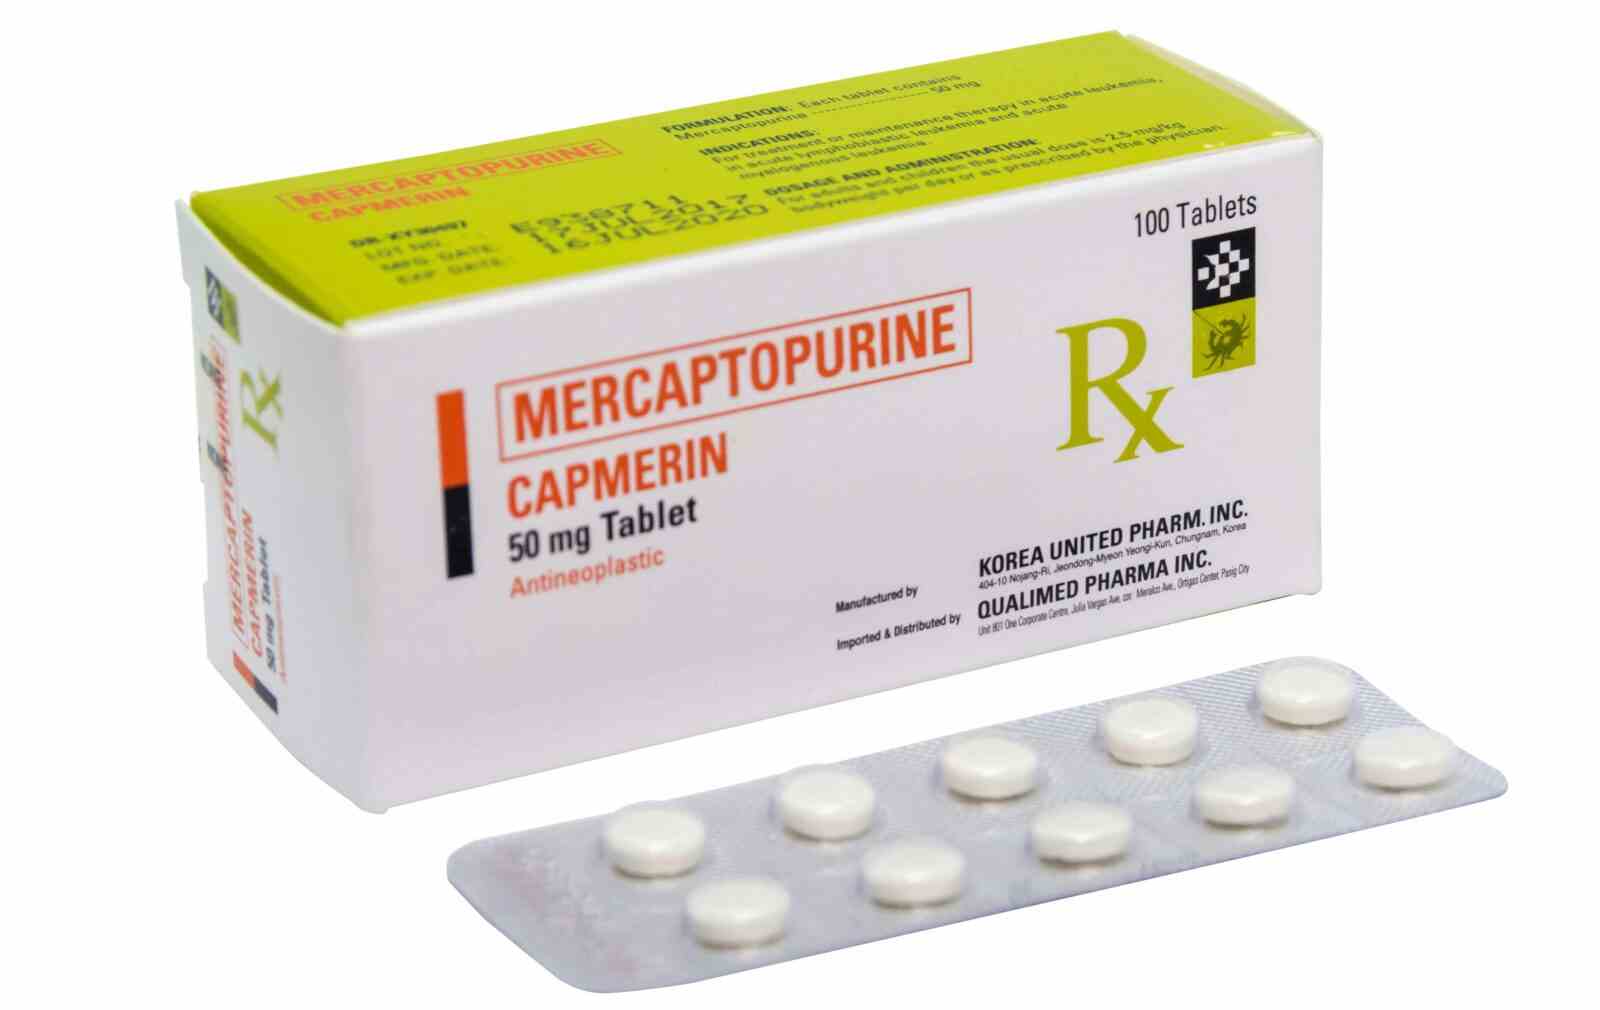 Capmerin 50 mg Mercaptopurine Qualimed Pharma Inc. online in Philippines